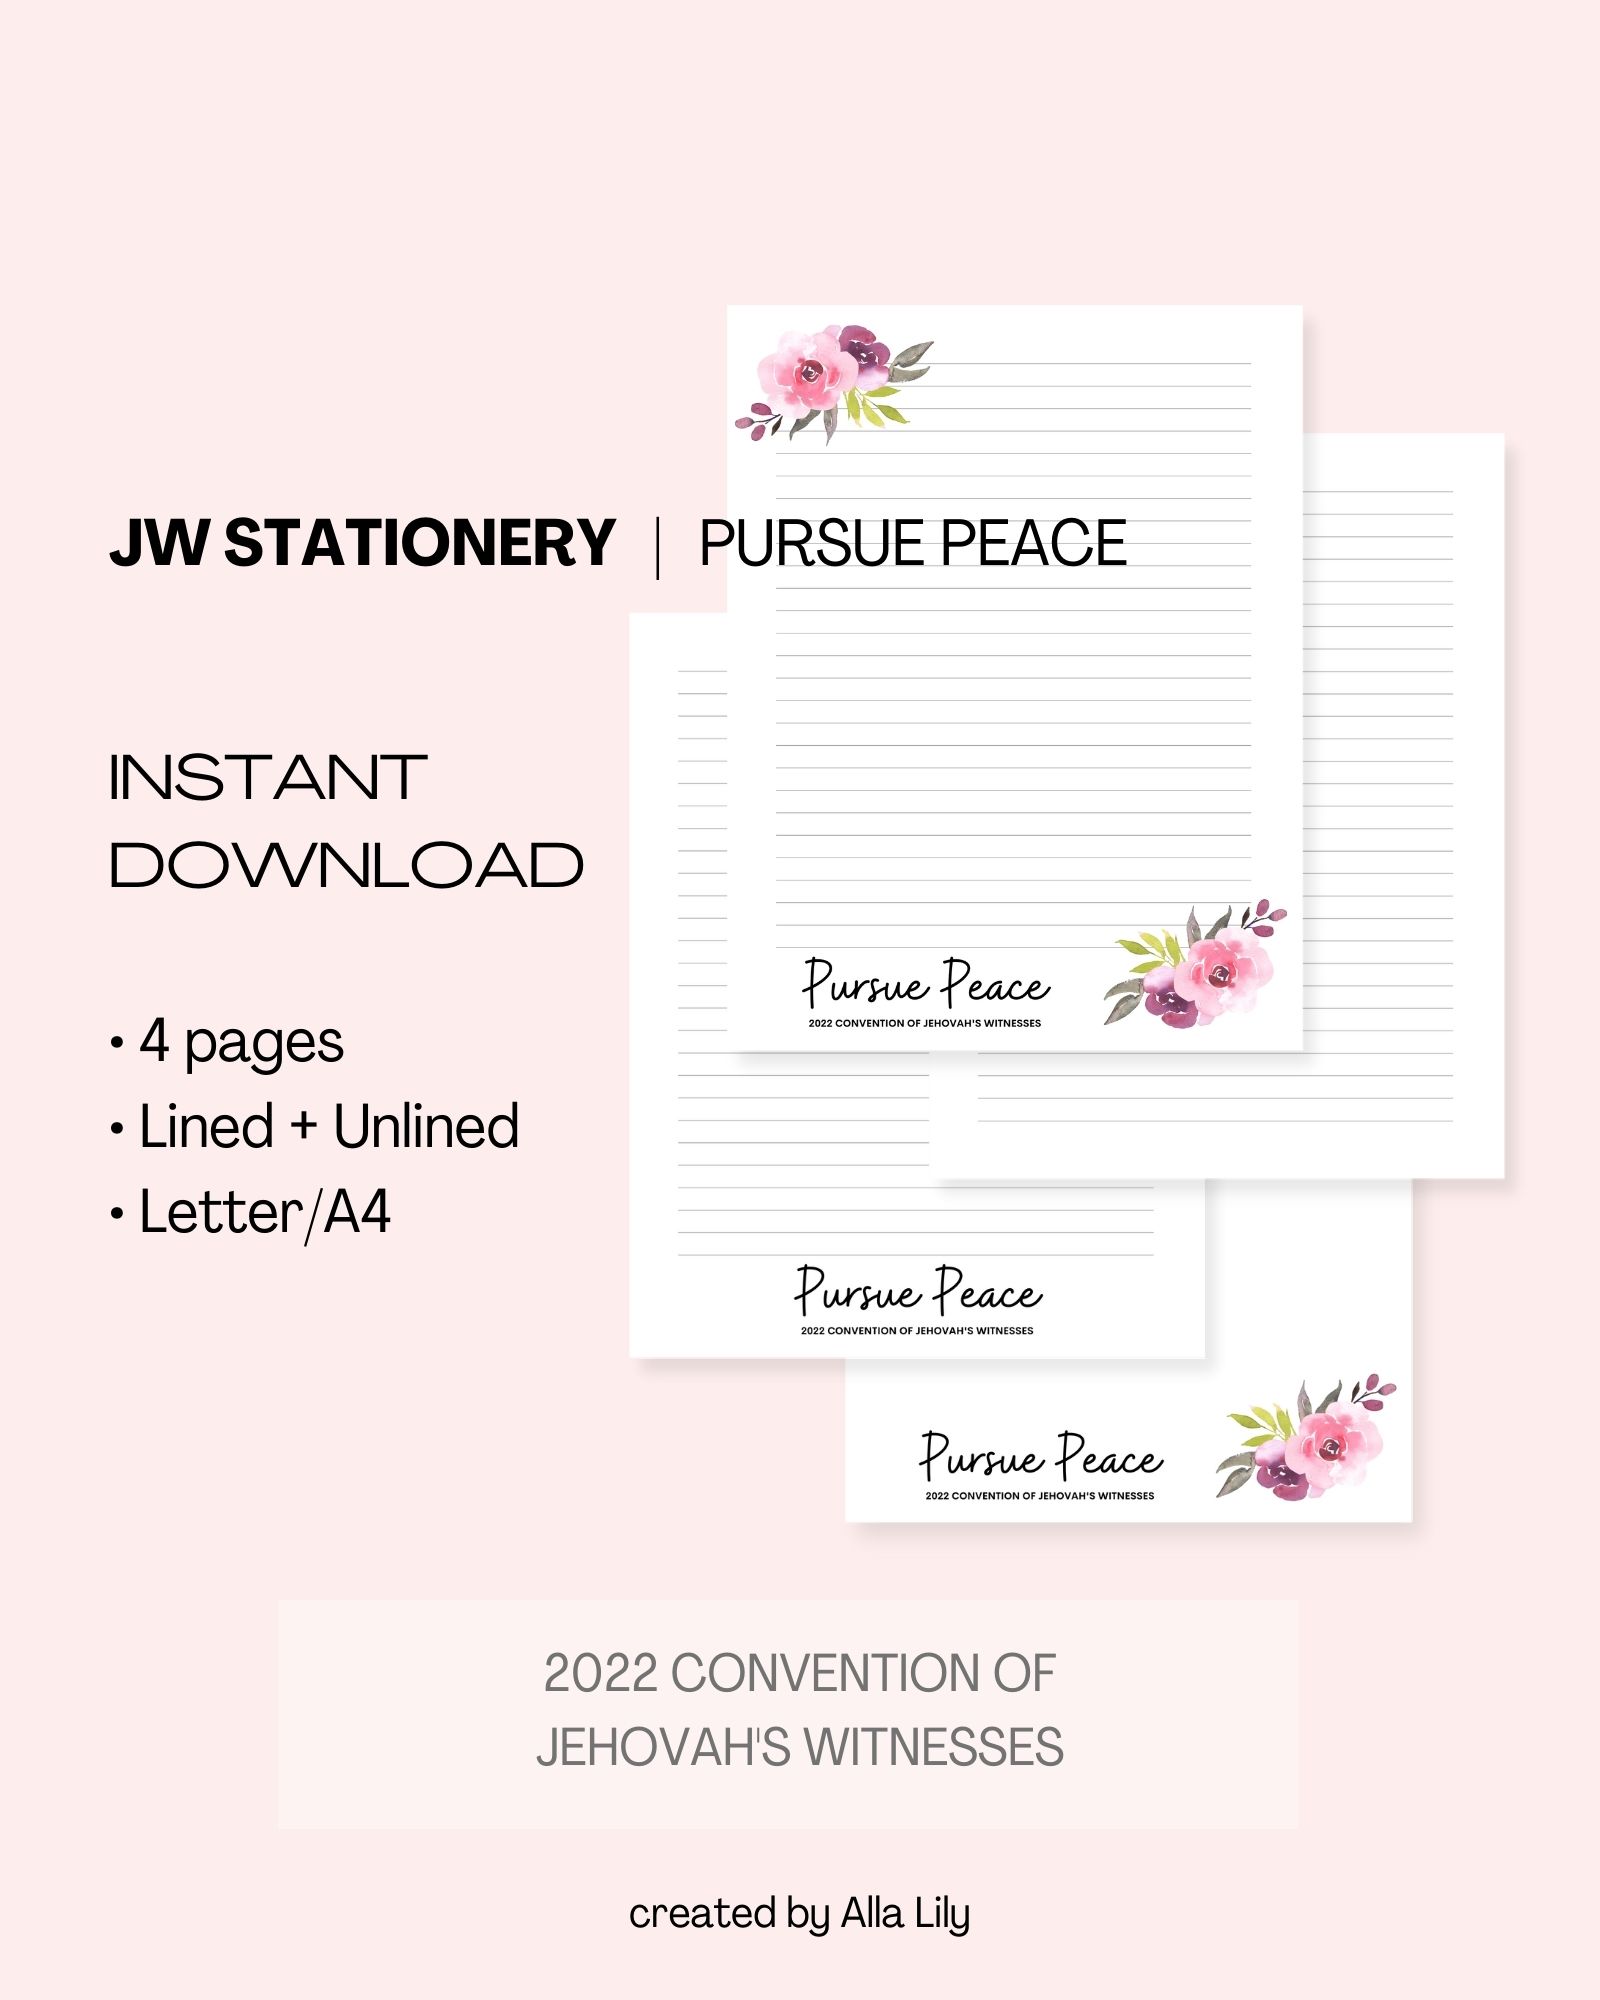 JW stationery Pursue Peace 2022